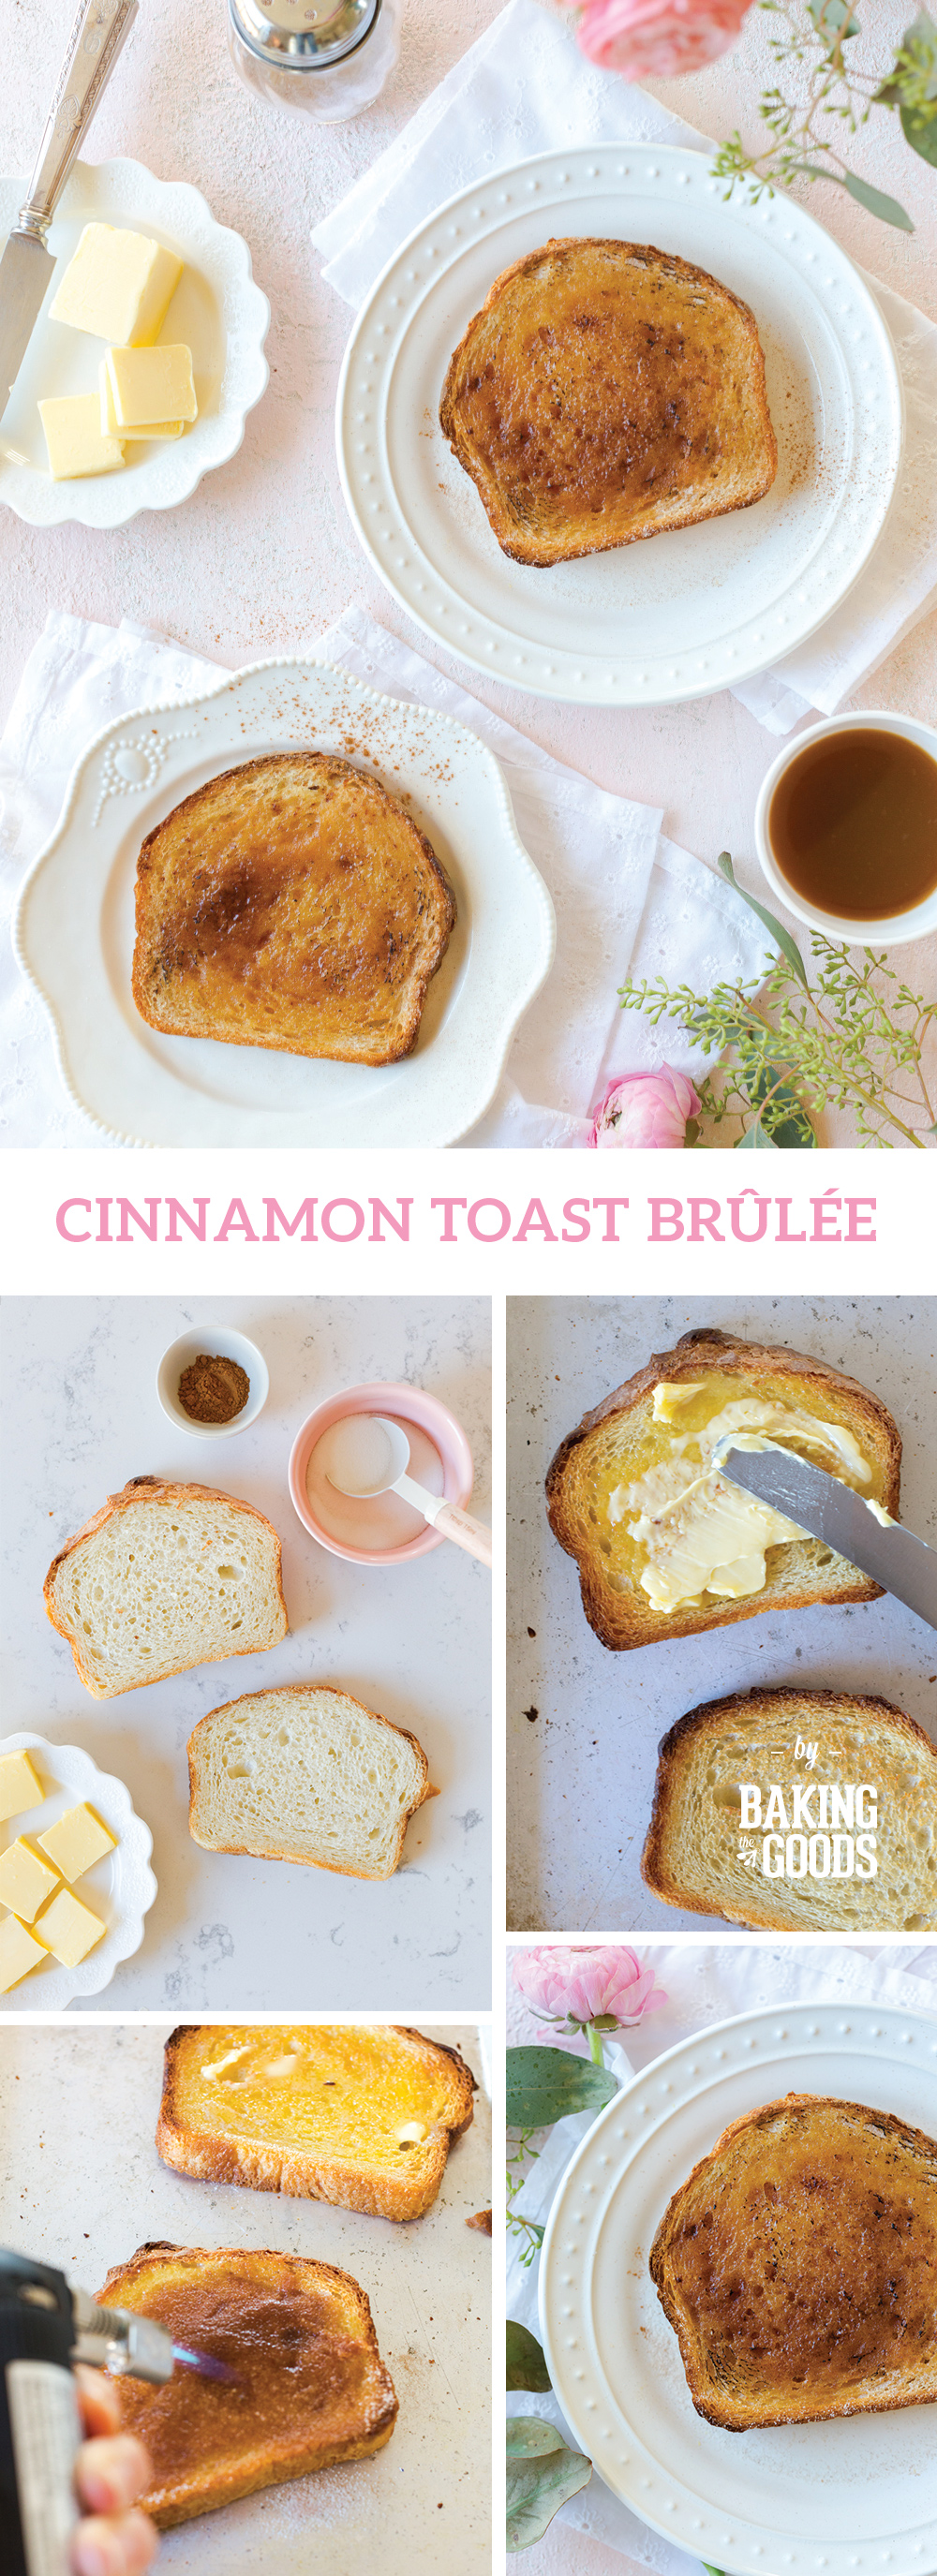 Cinnamon Toast Brûlée by Baking The Goods